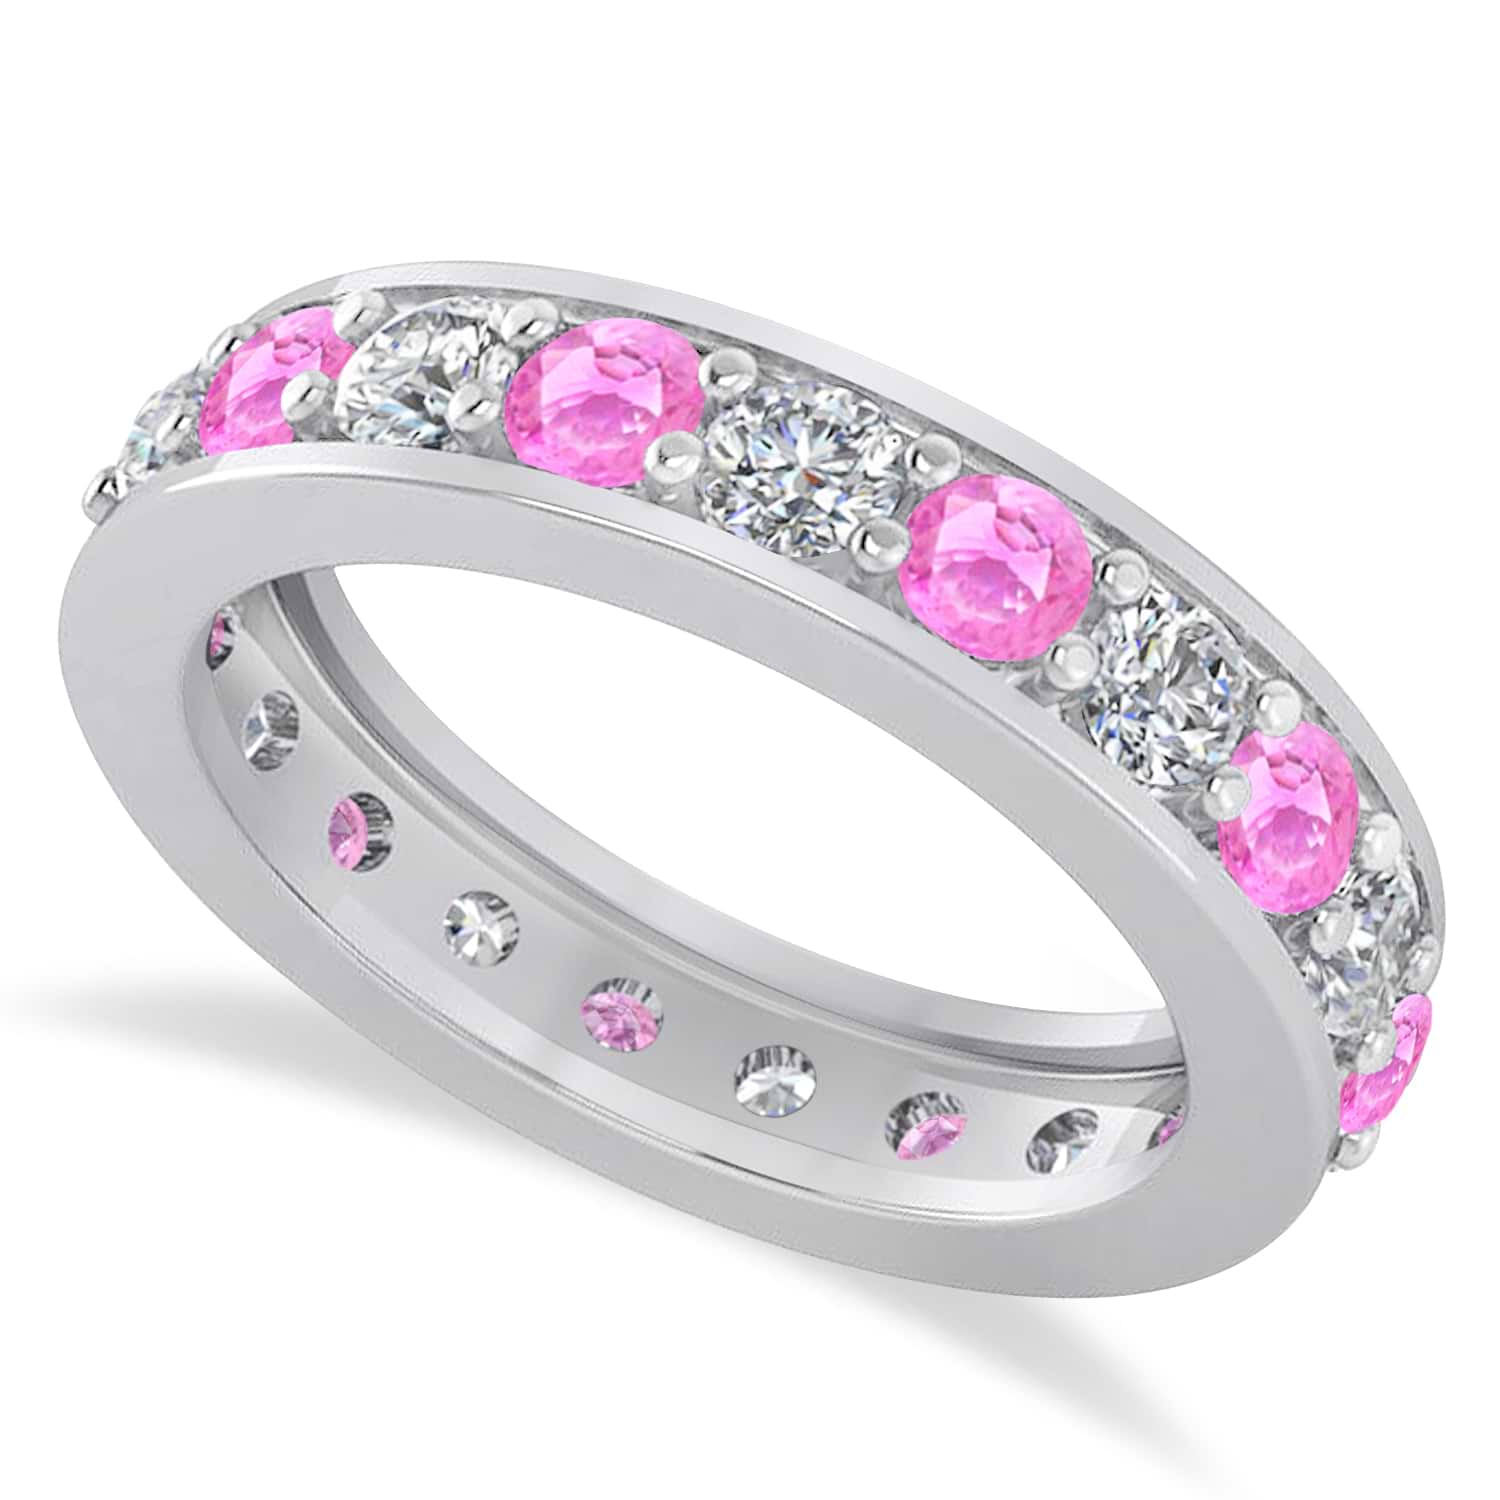 Diamond & Pink Sapphire Eternity Wedding Band 14k White Gold (2.10ct)